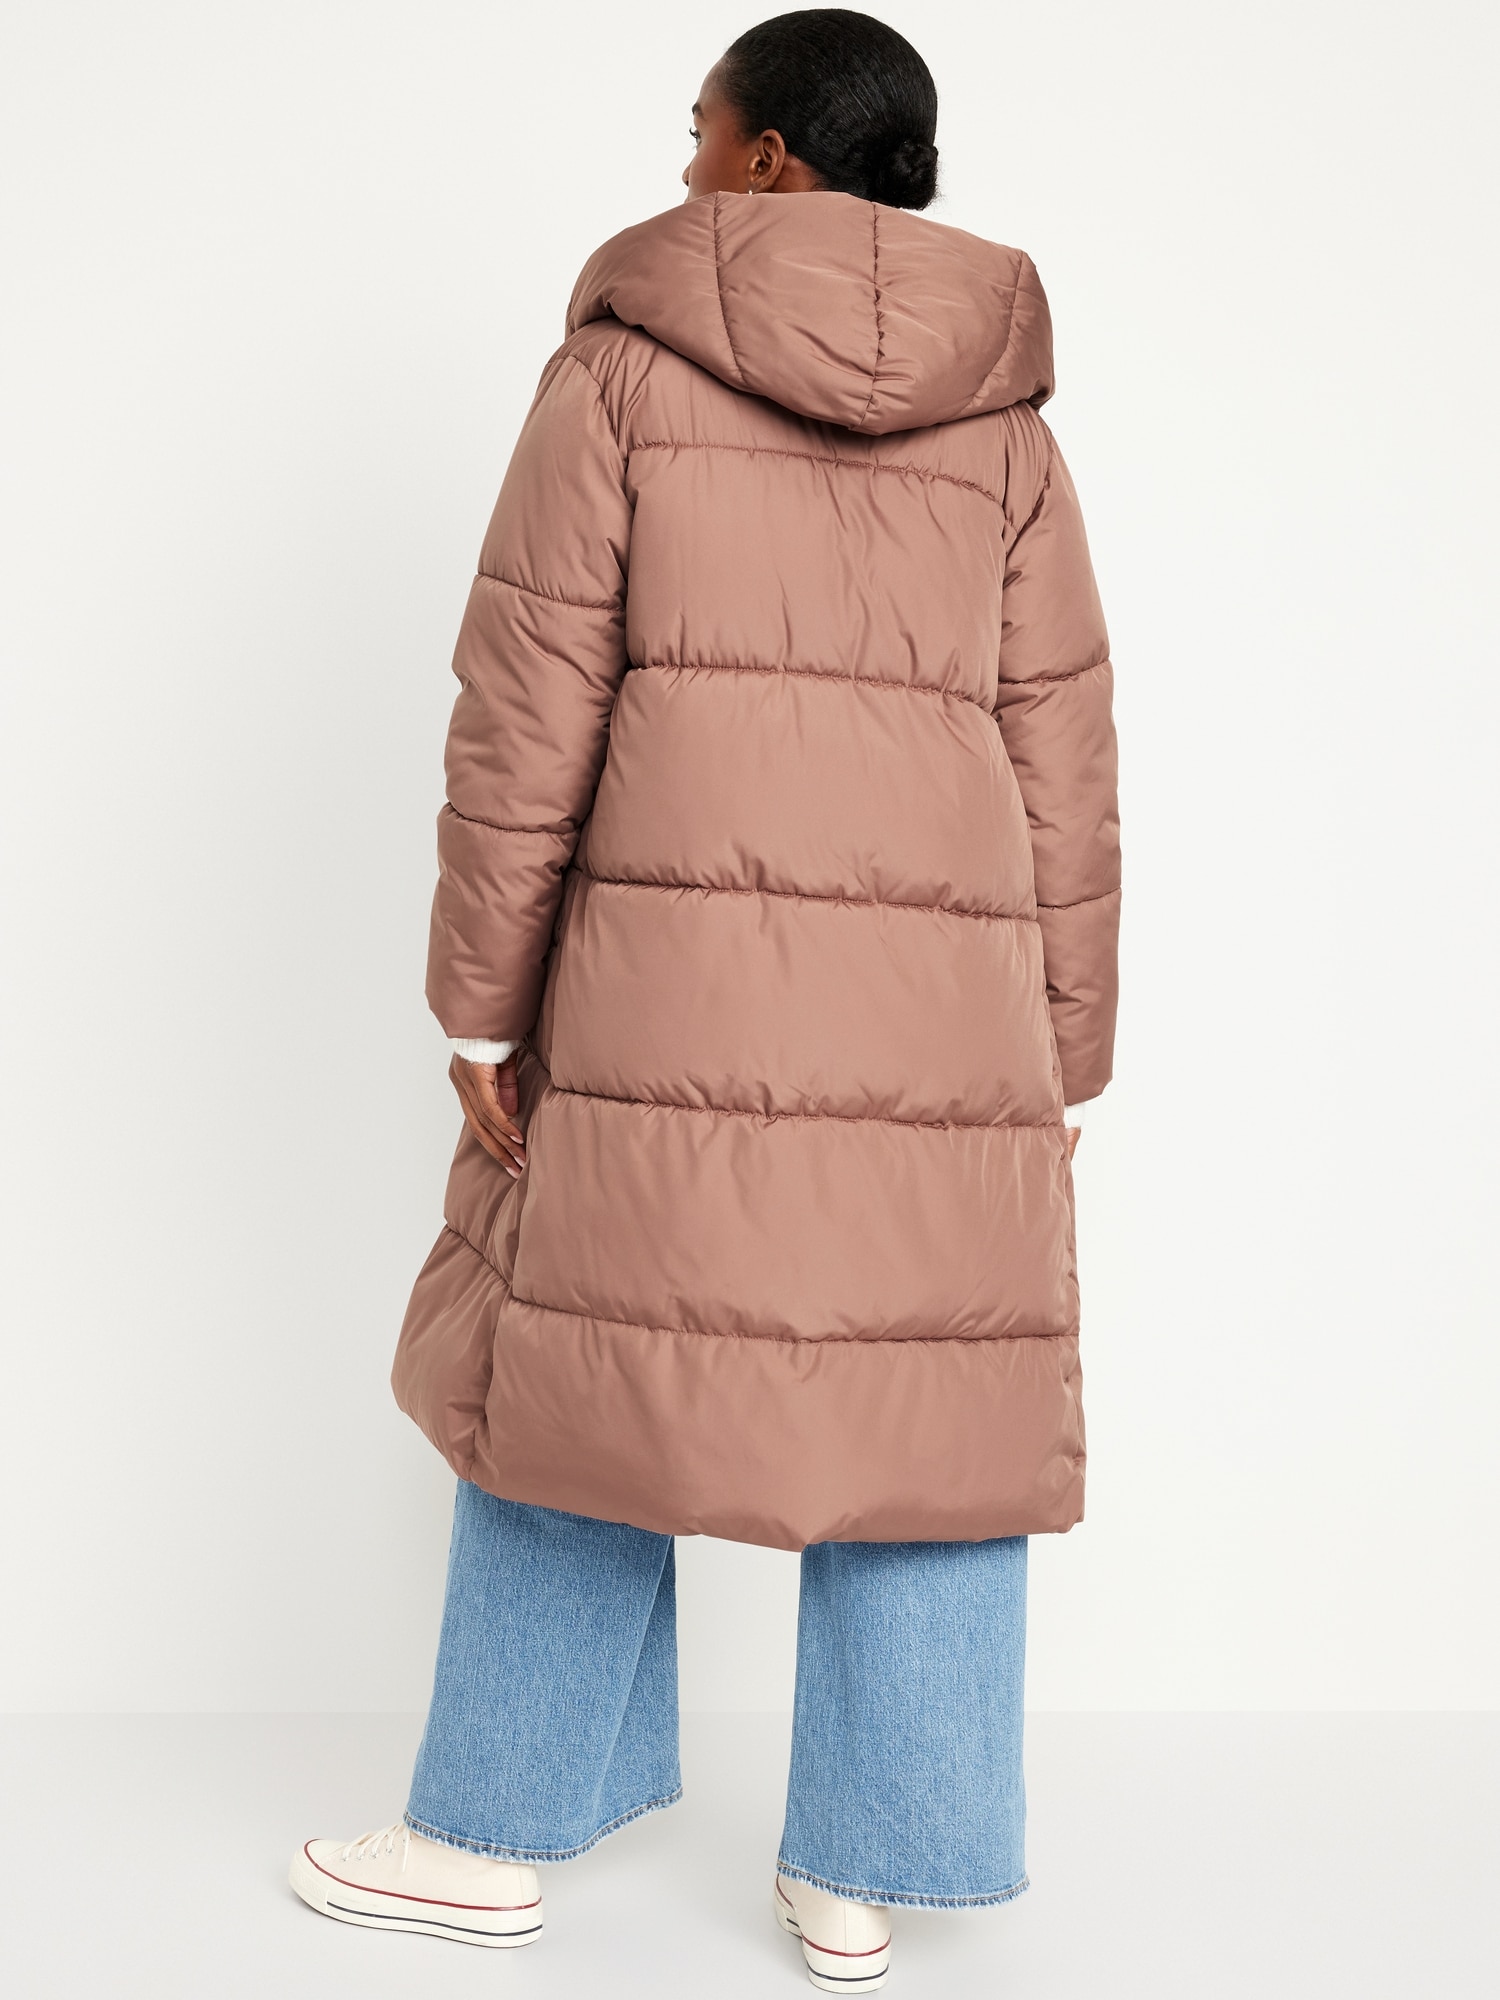 Aayomet Long Winter Coats For Women Women's Lightweight Water-Resistant  Hooded Puffer Coat,Red M